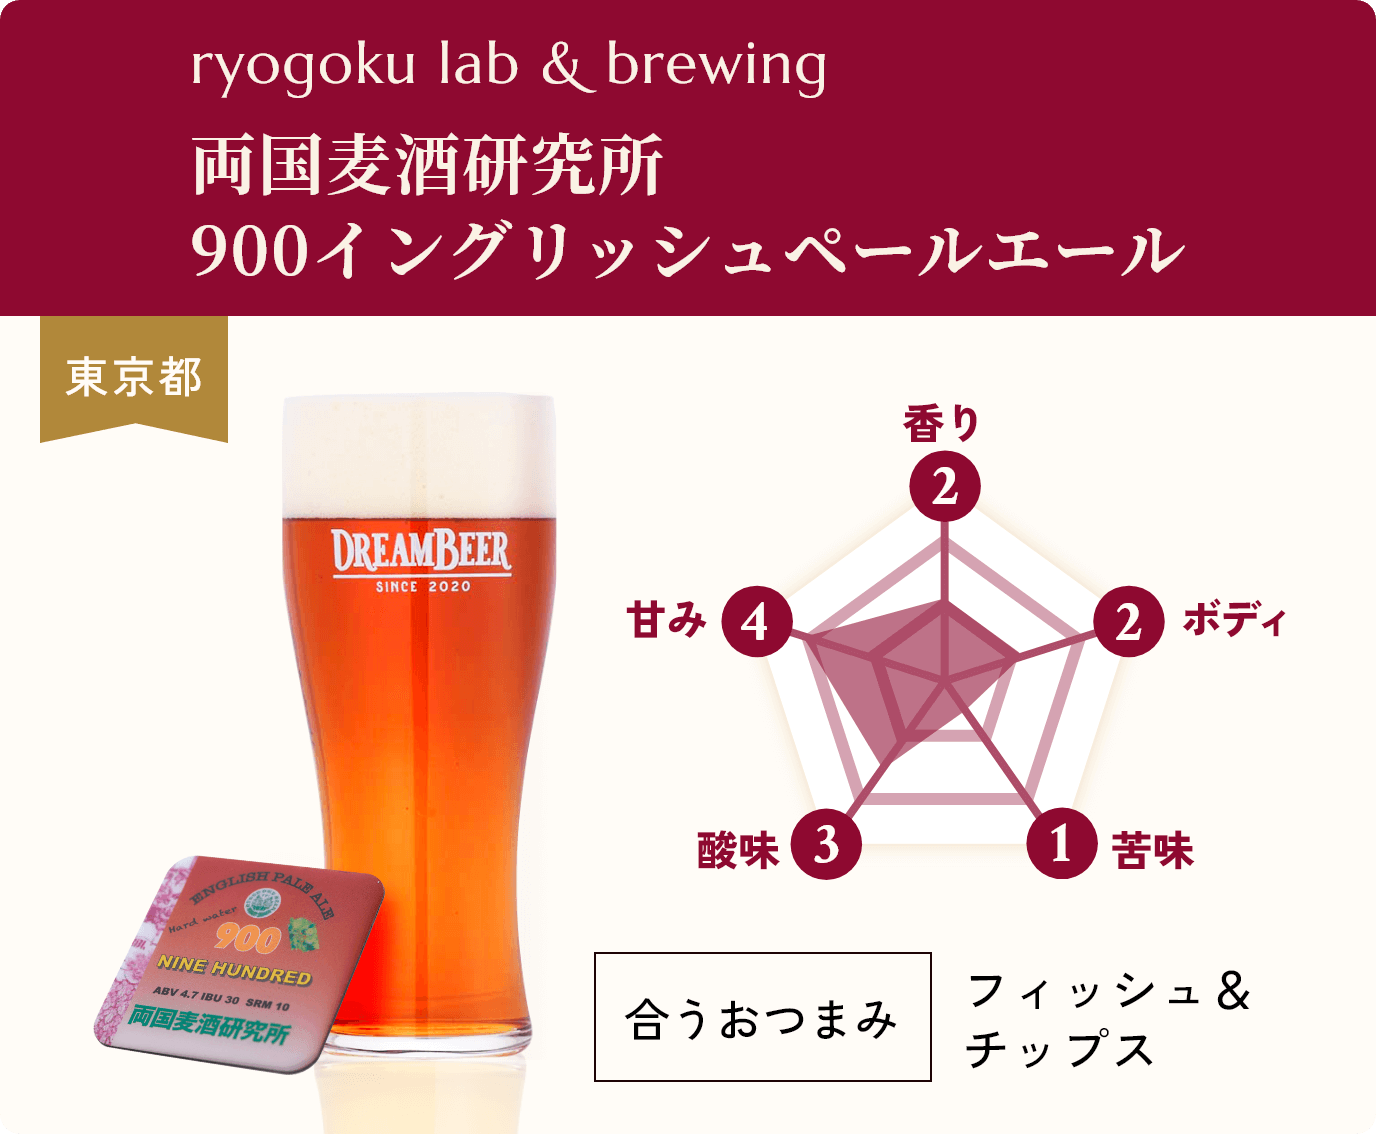 ryogoku lab & brewing,両国麦酒研究所 900イングリッシュペールエール